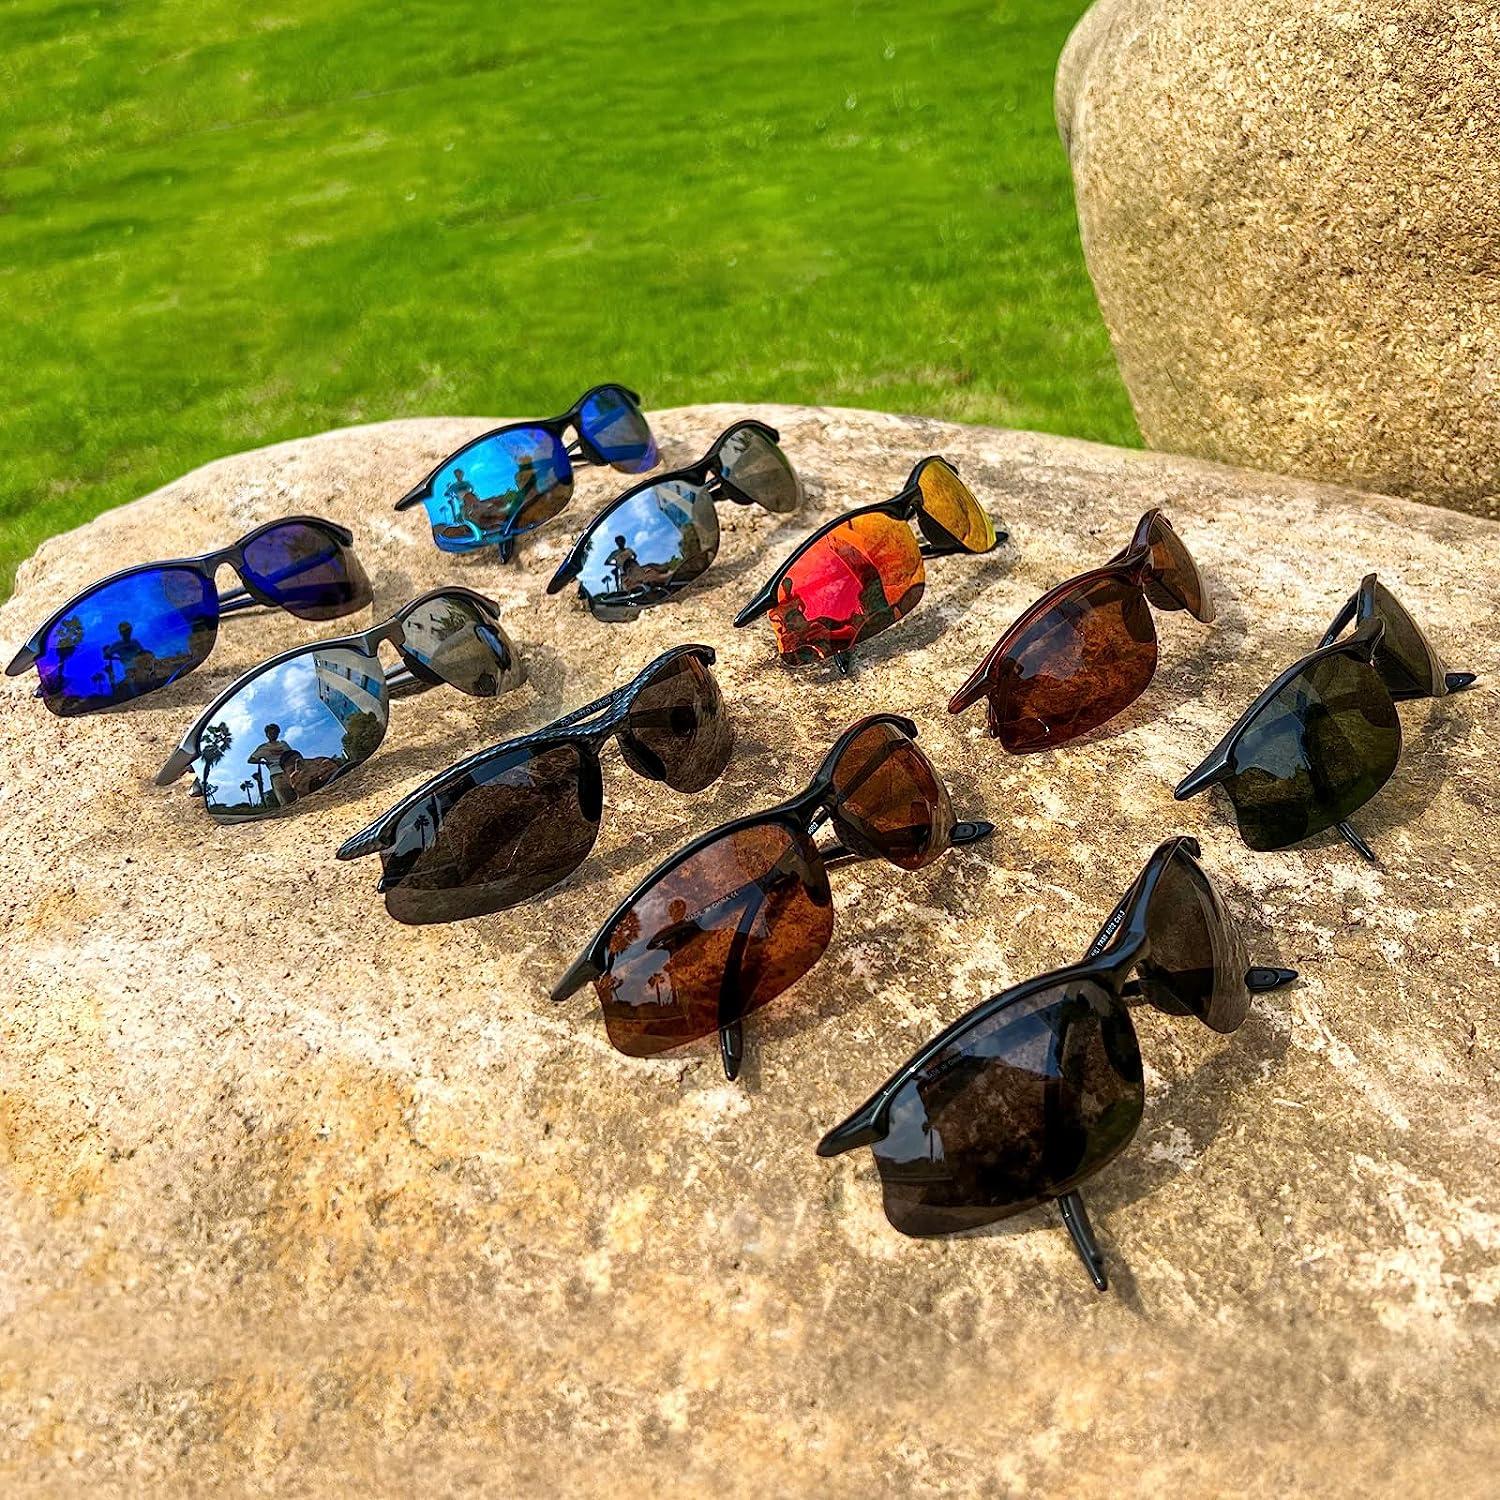 JULI Polarized Sports Sunglasses for Men Women Tr90 Unbreakable